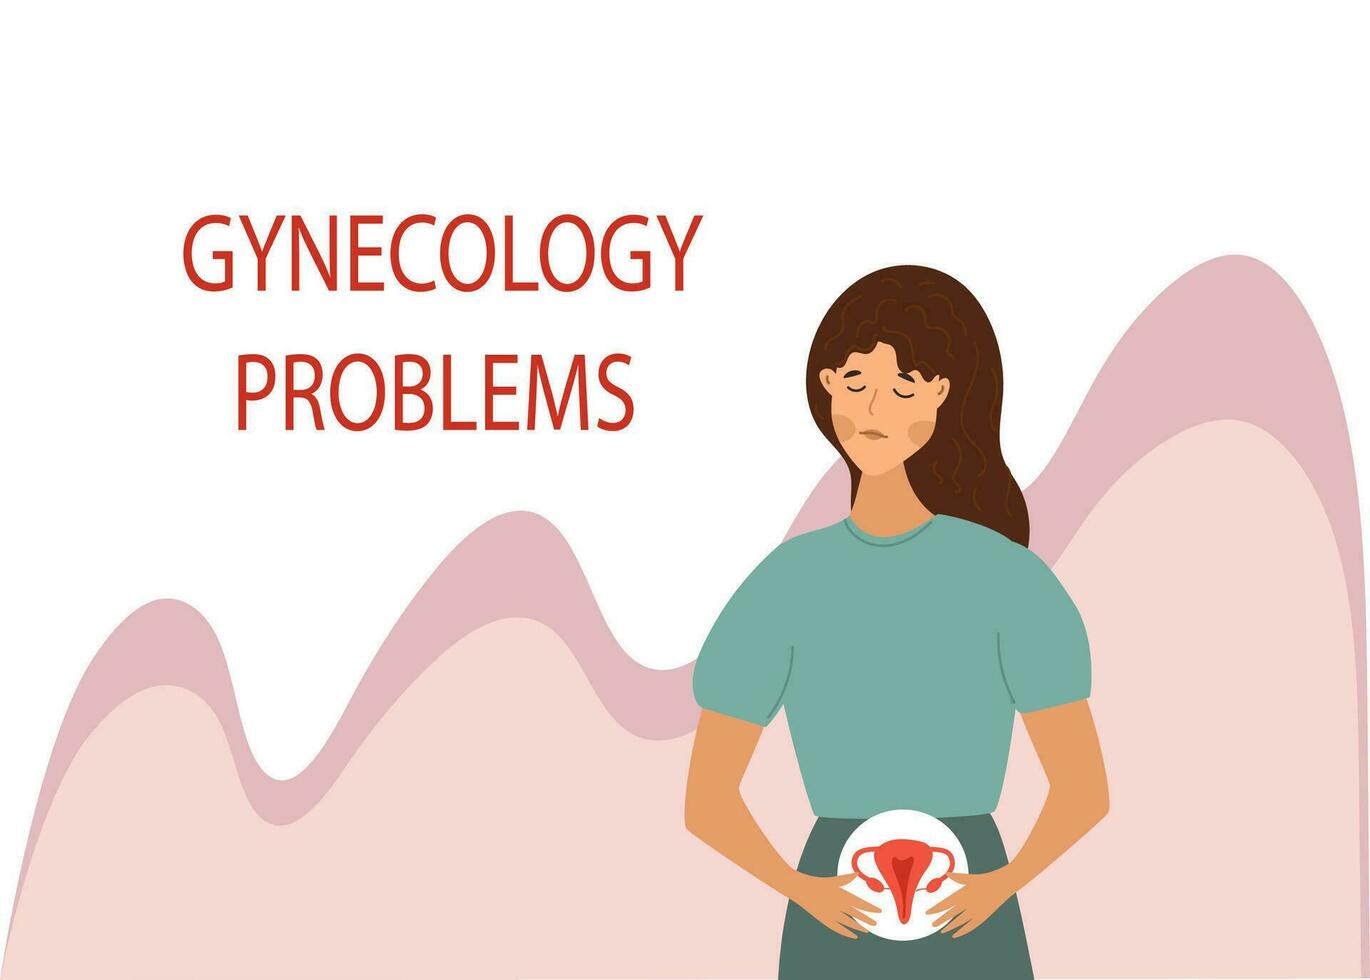 endometrios, endometrium dysfunktionalitet, endometrios concept.vector platt illustration vektor